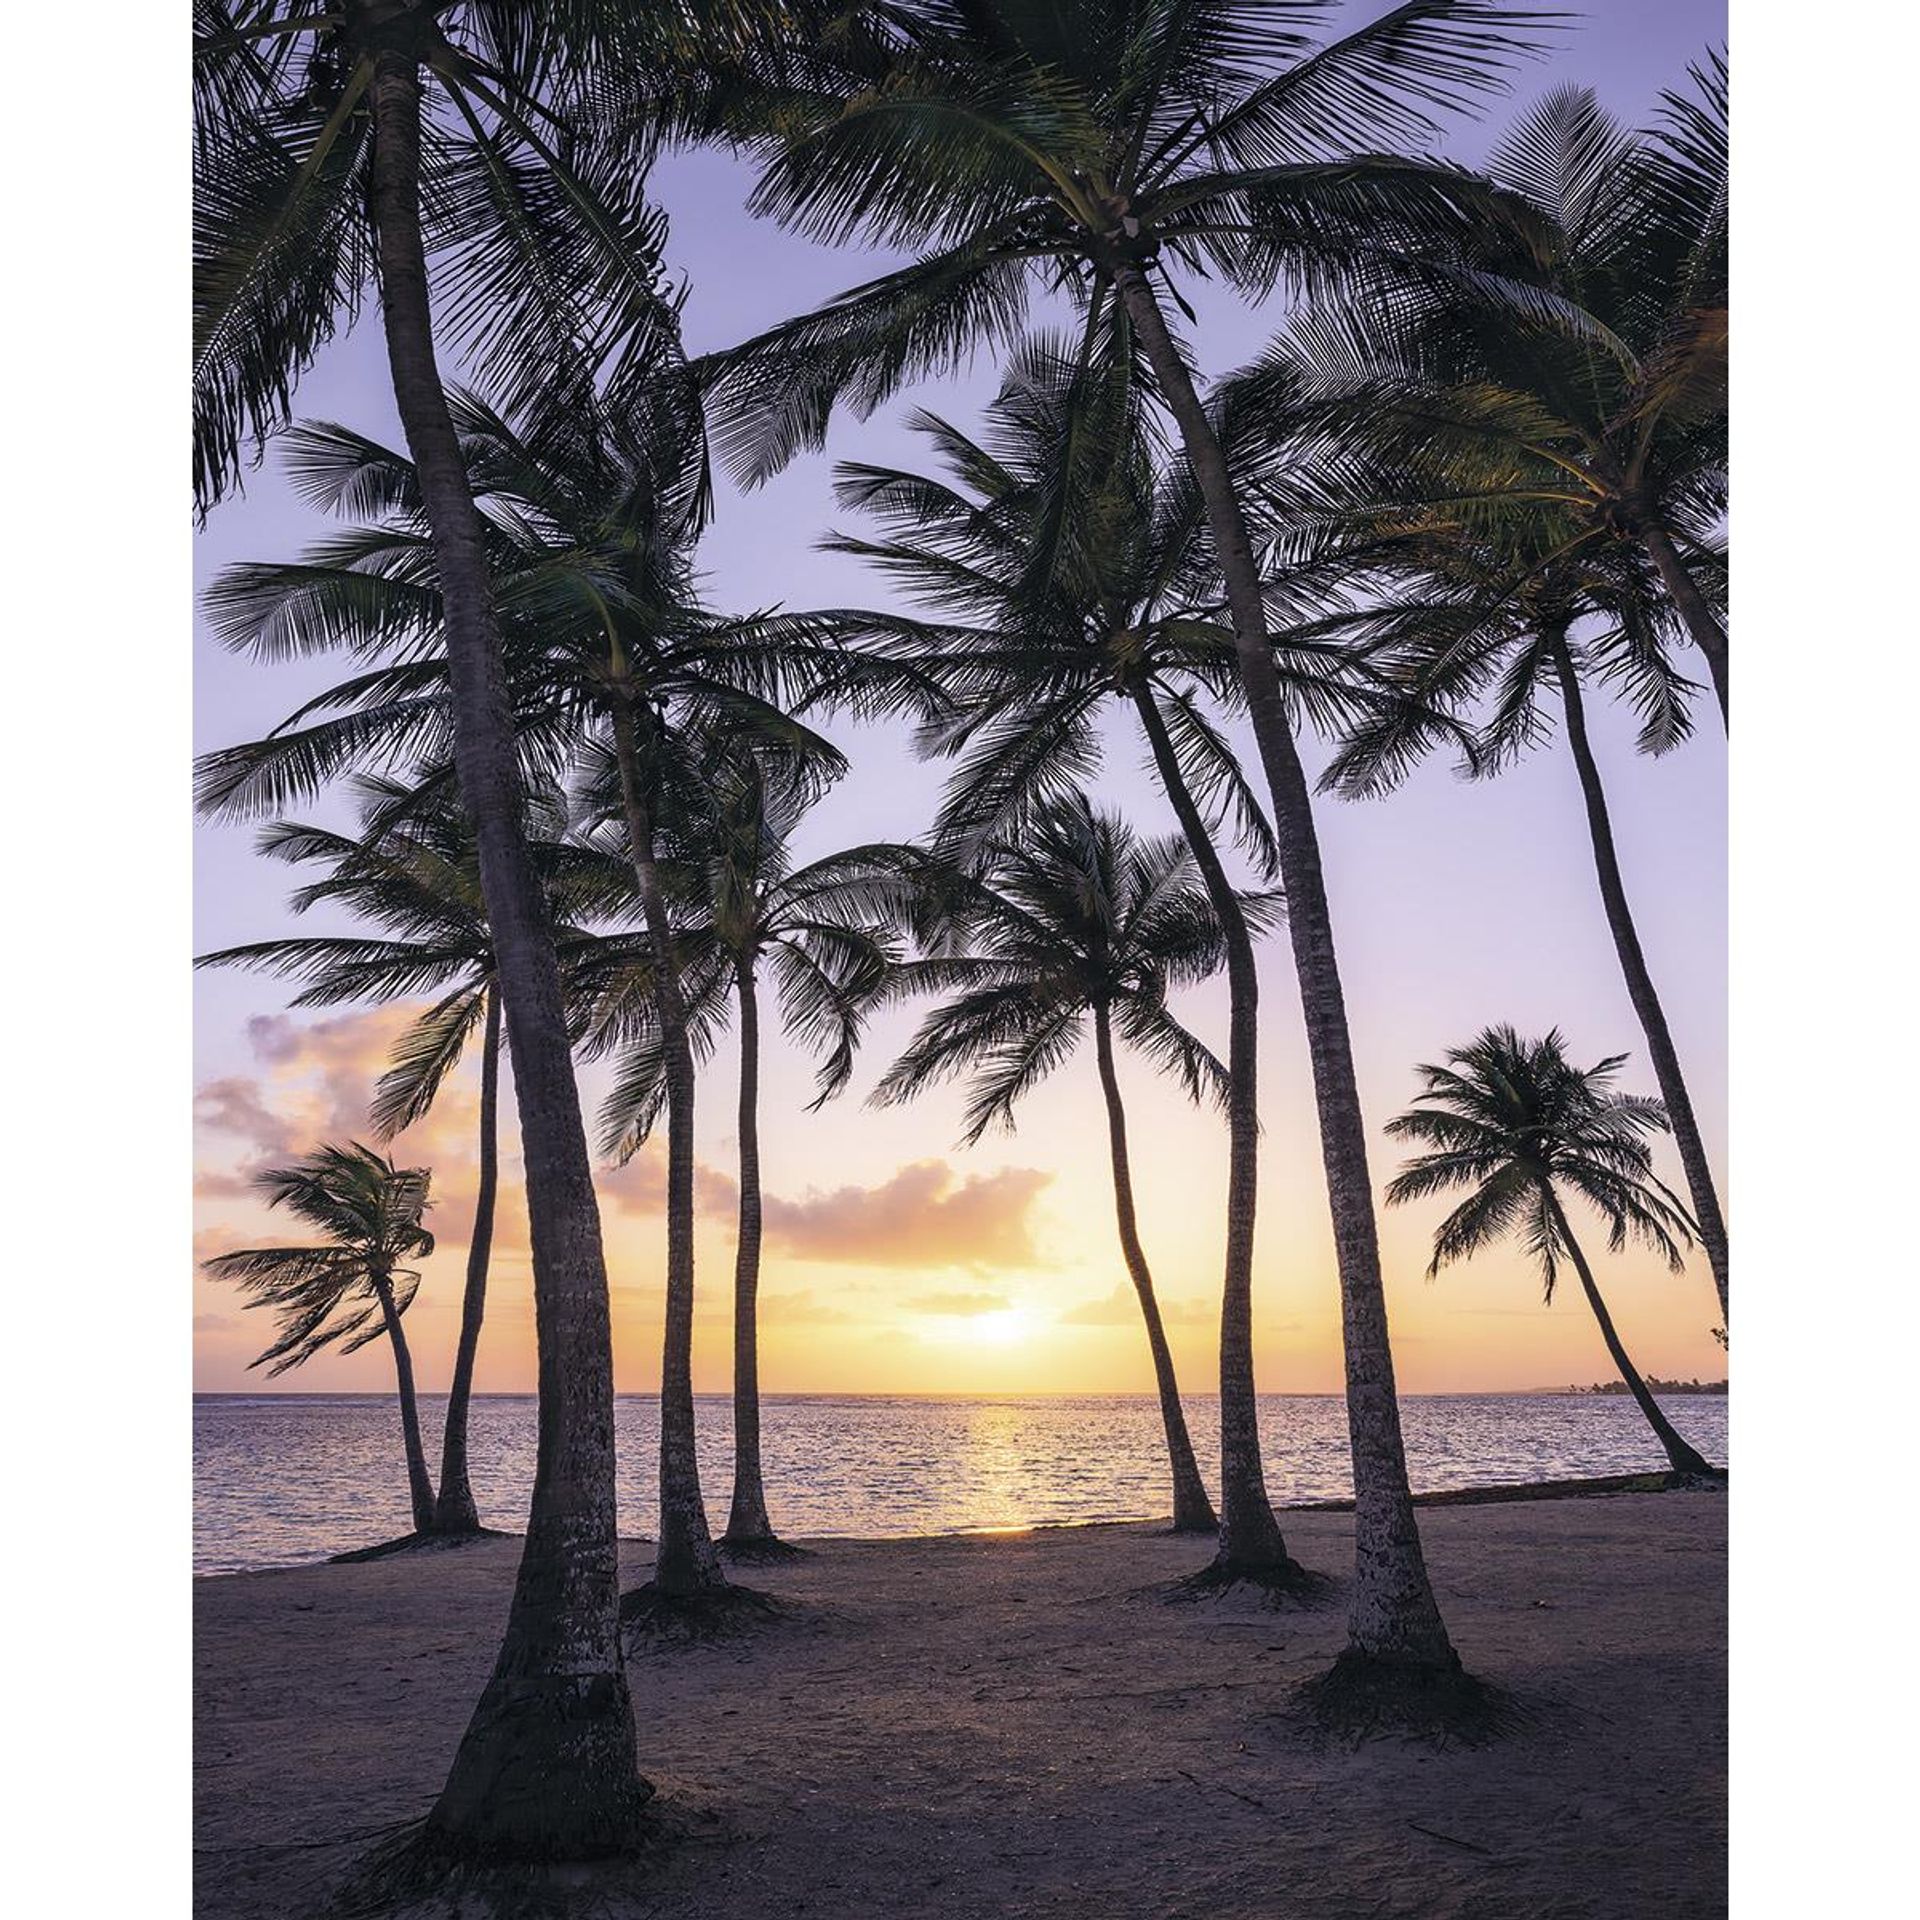 Vlies Fototapete - Palmtrees on Beach - Größe 200 x 250 cm